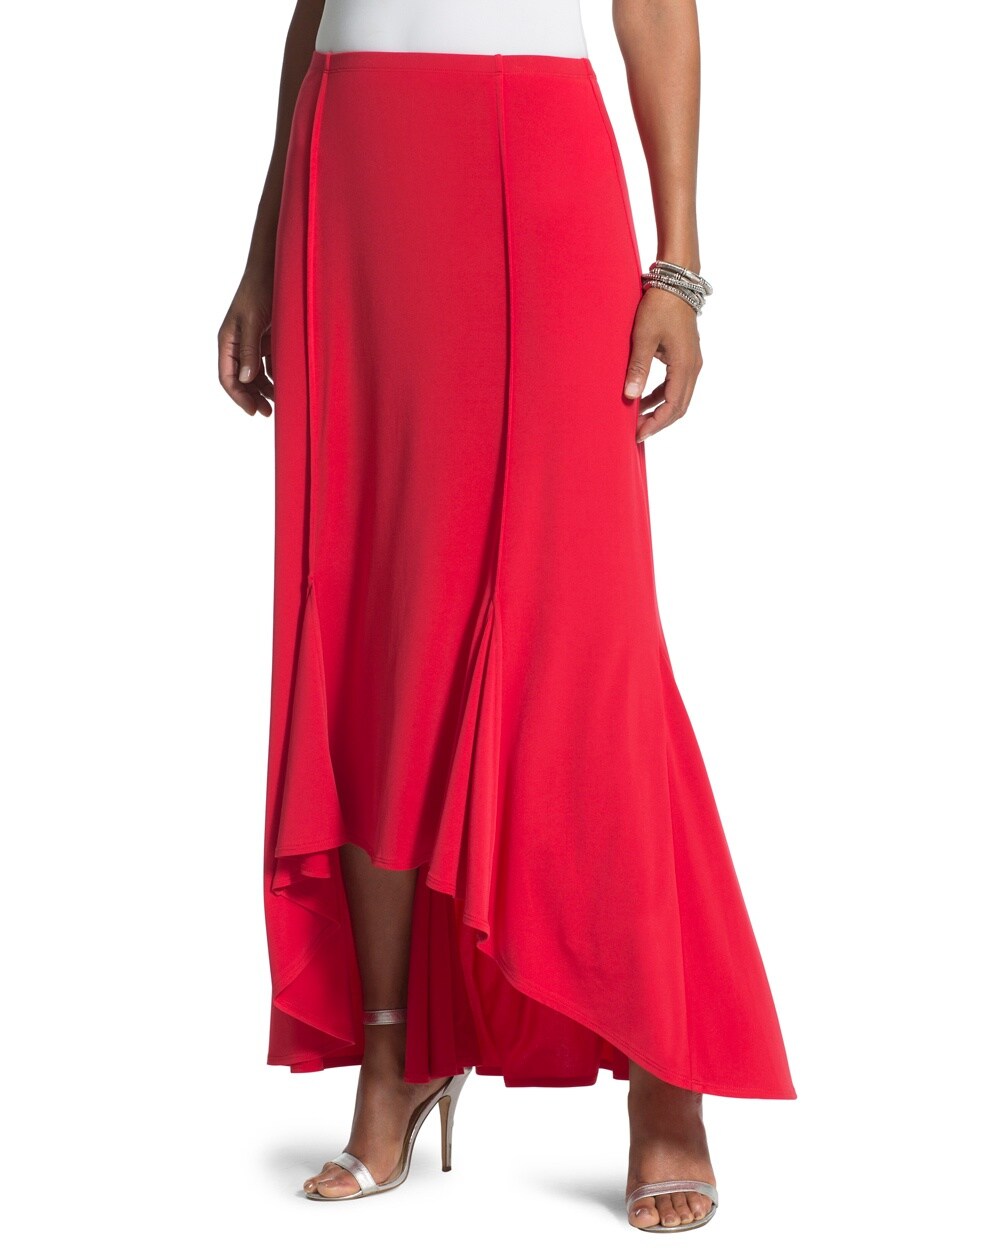 Red Maxi Skirt - Women's Dresses & Skirts - Midi & Maxi Dresses - Chico's